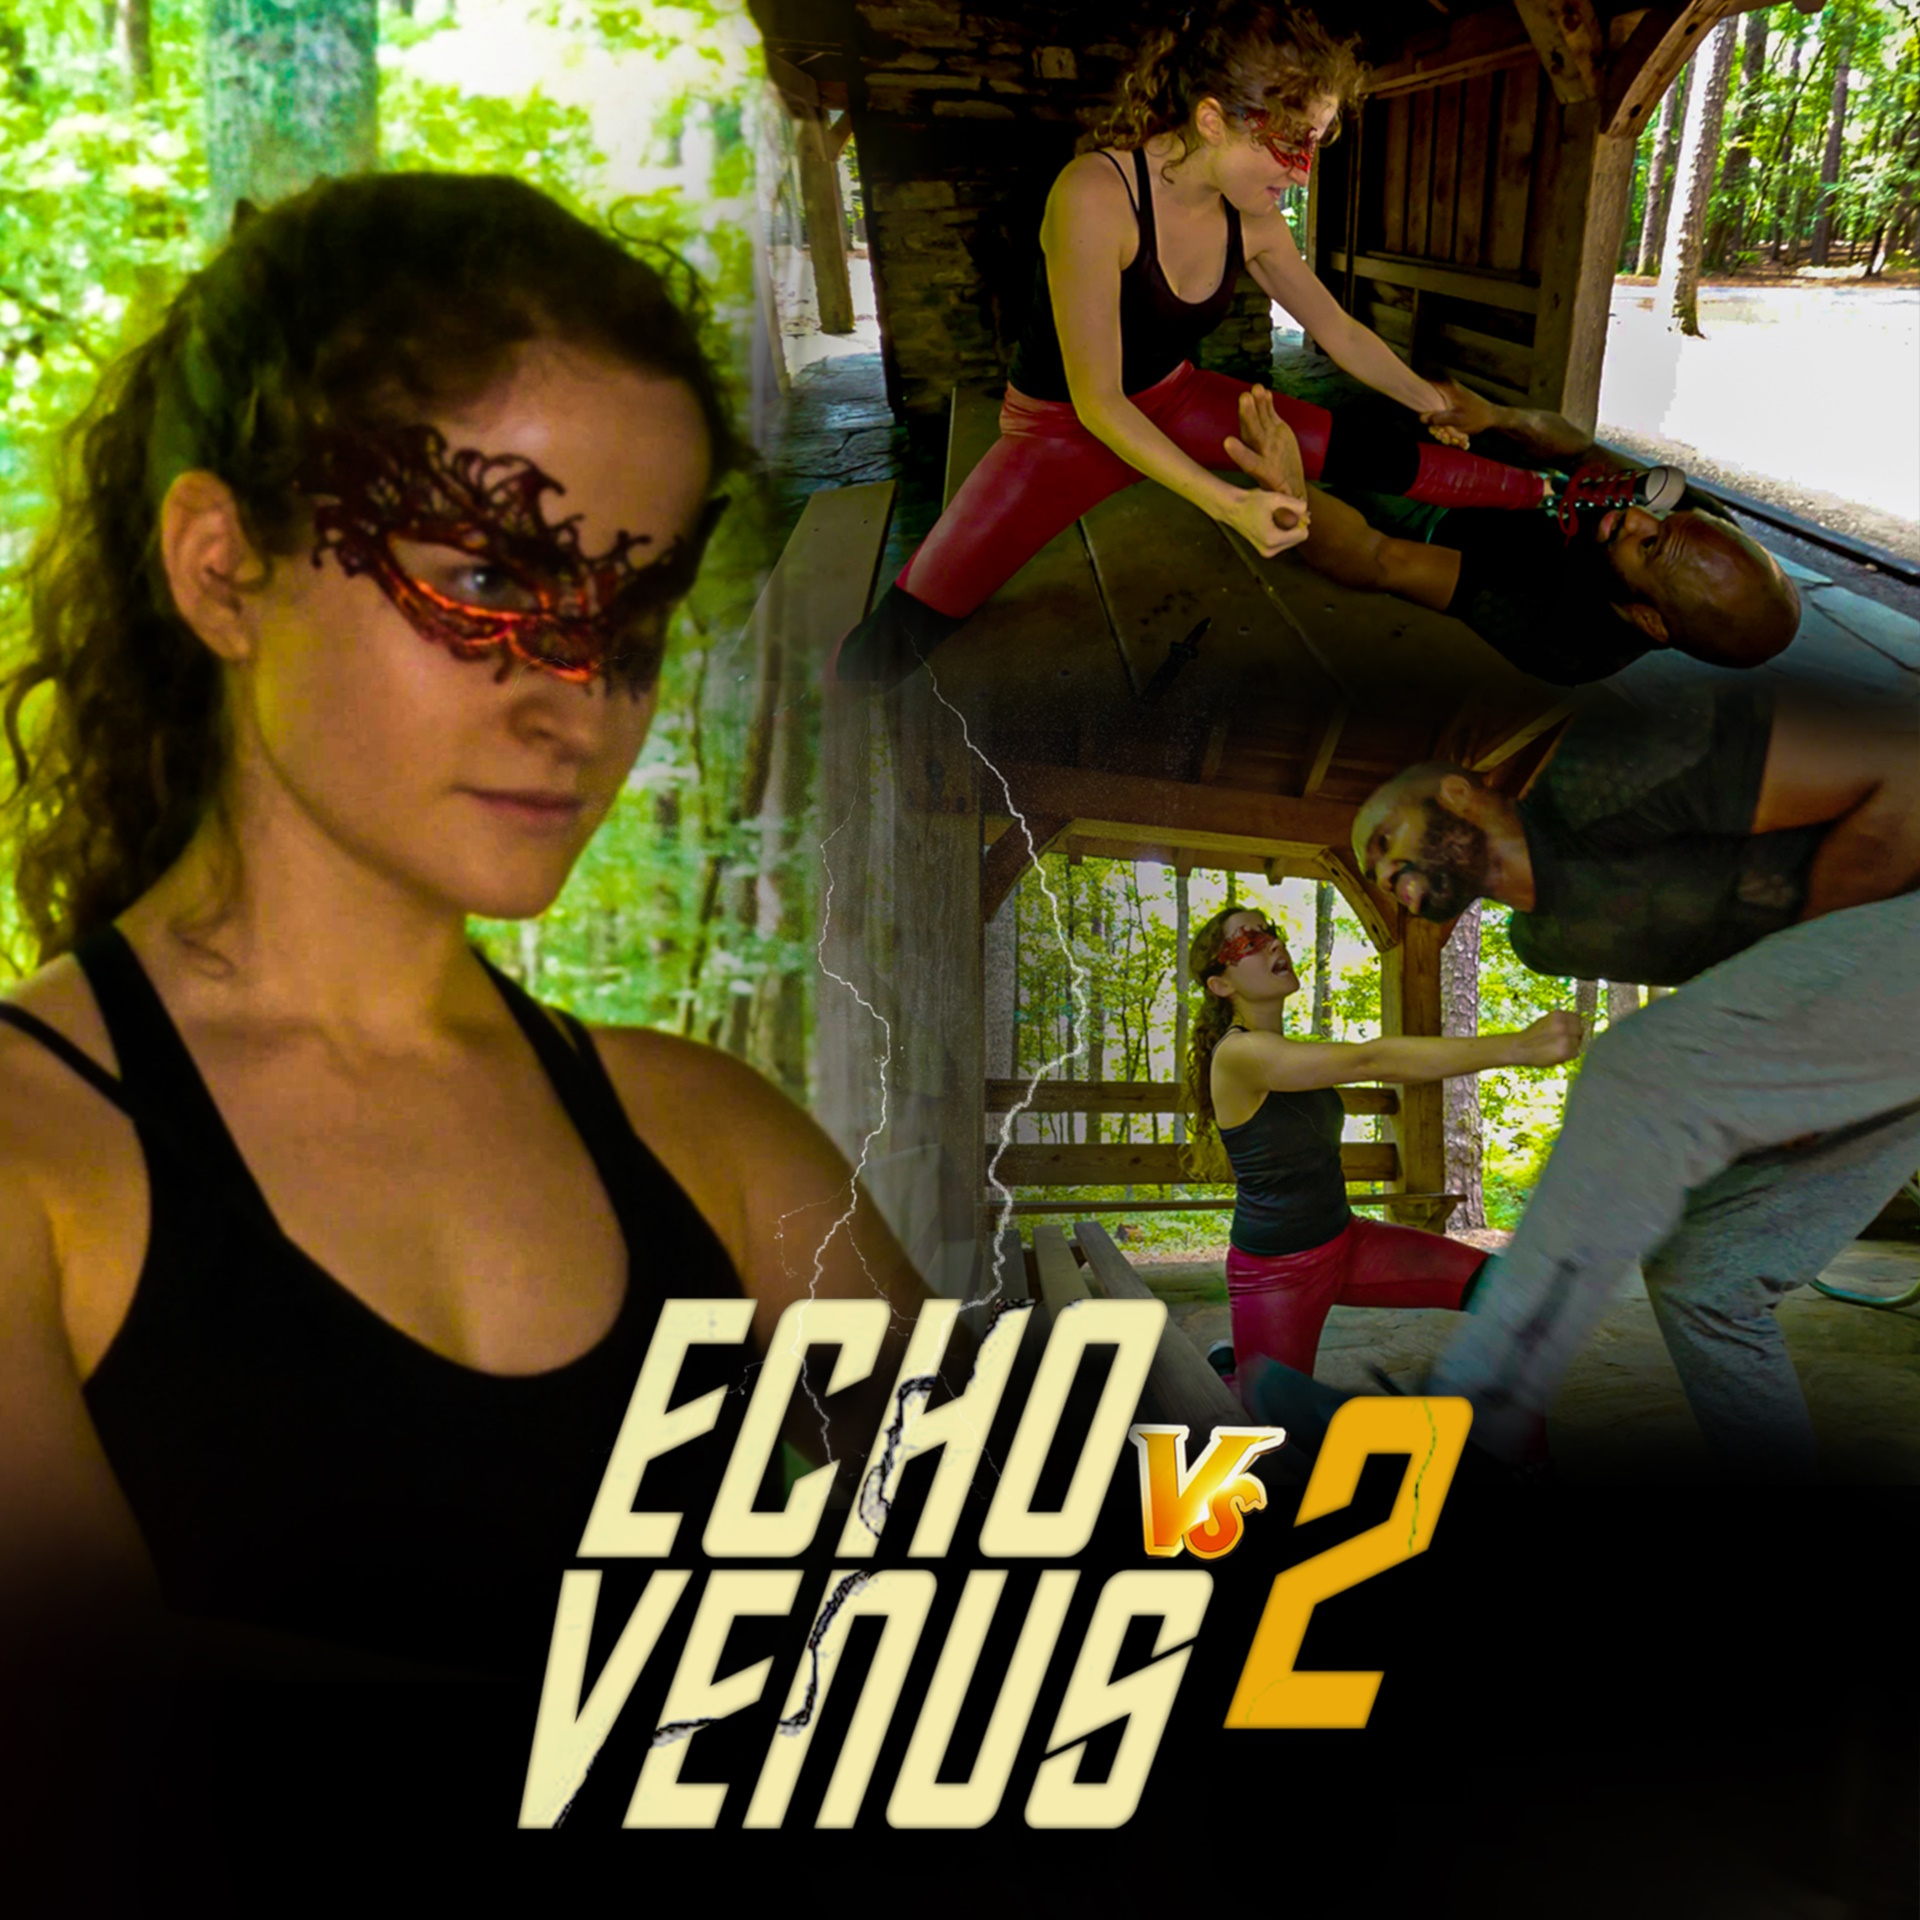 #6 - Echo vs. Venus 2: The Bounty